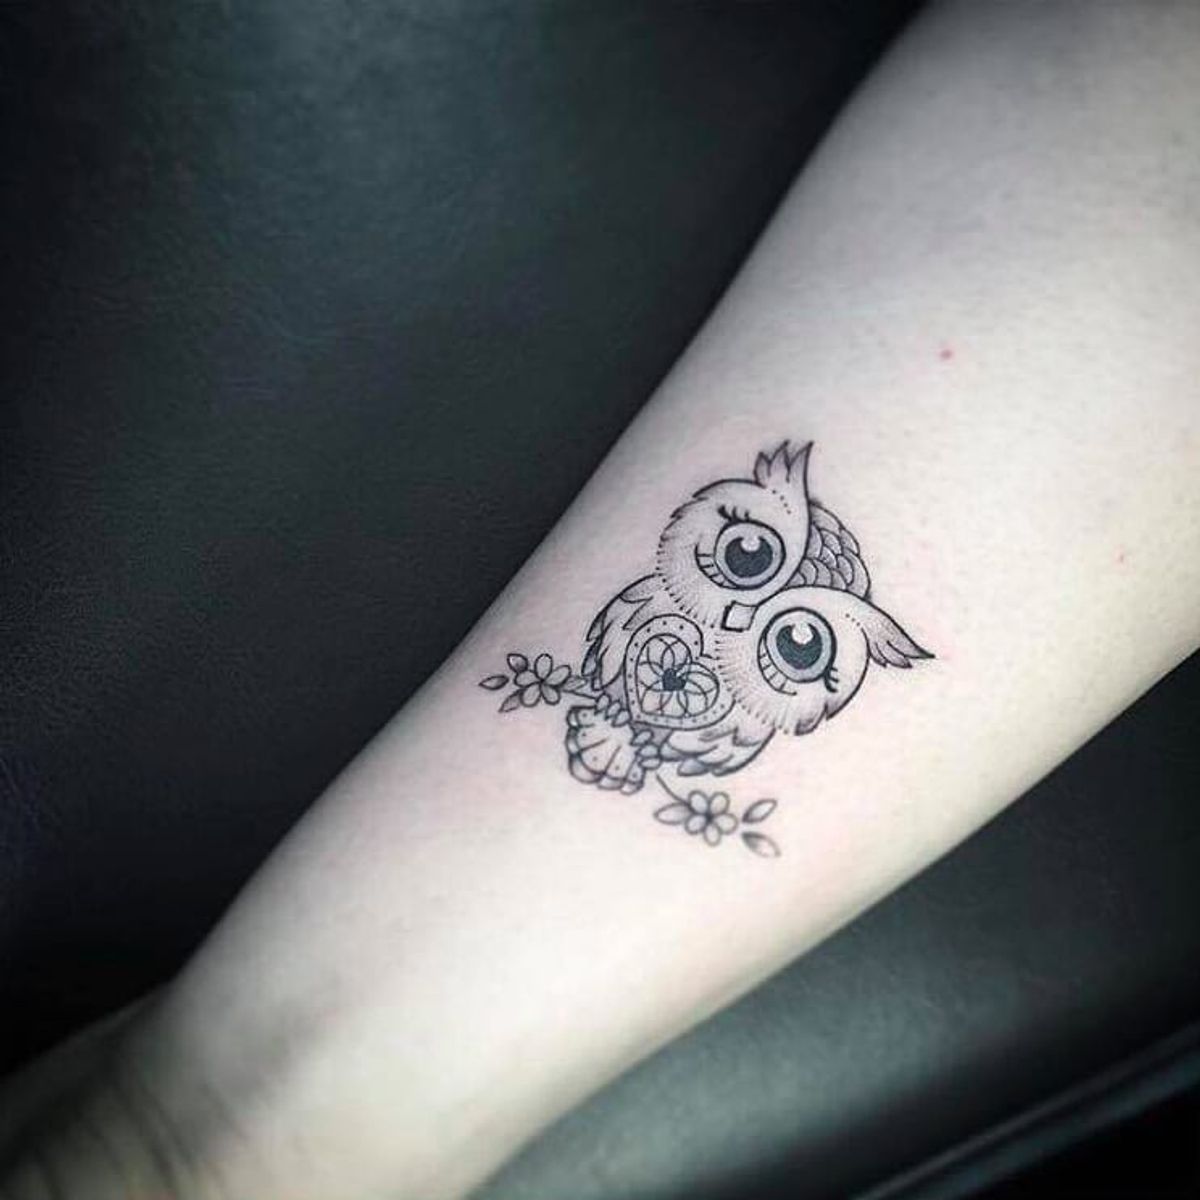 Tattoo uploaded by Rafaela Marchetti • Por Jéssika Campos! # ...